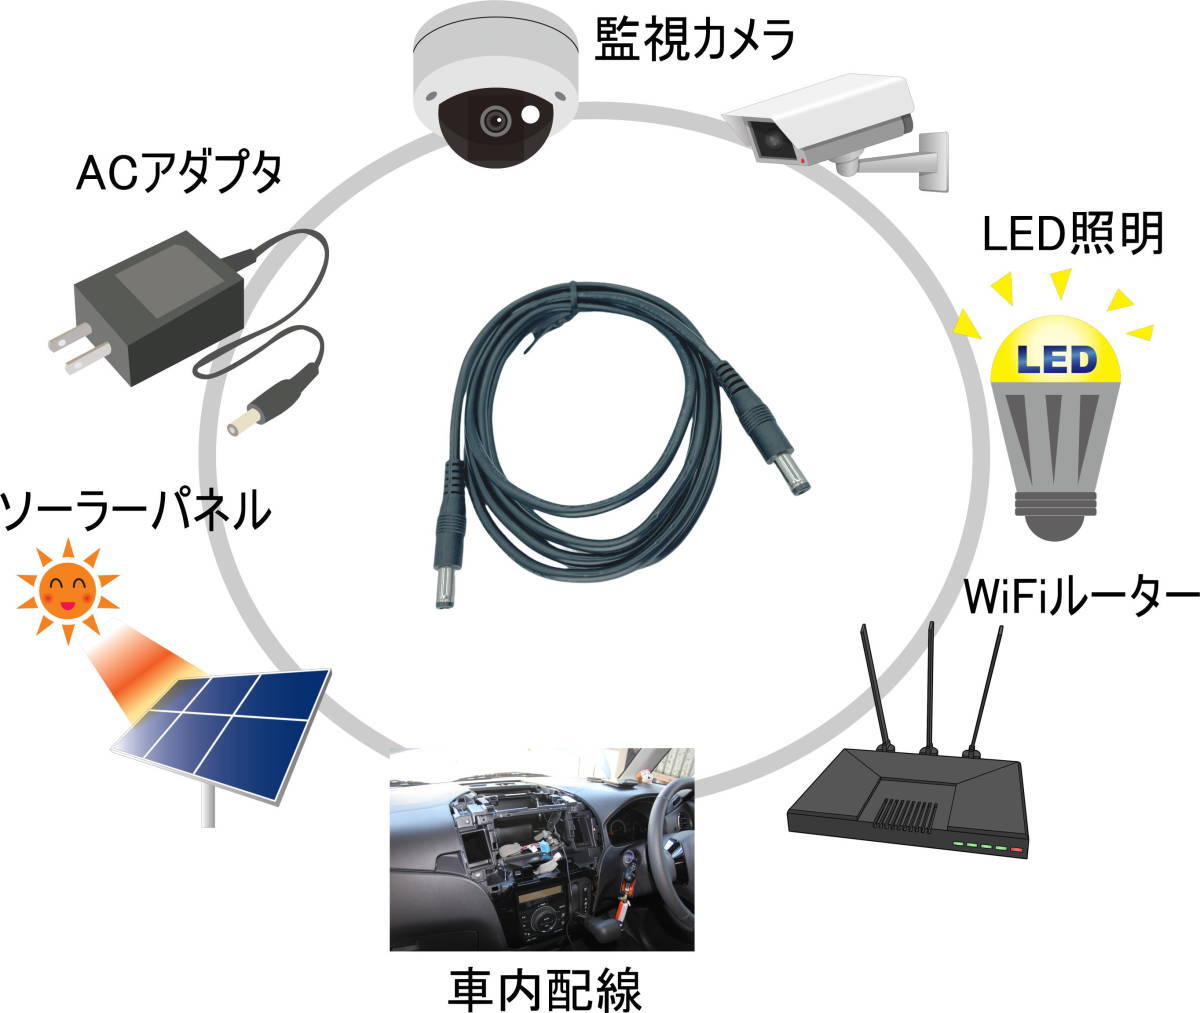 2m DCケーブル 外径4.0/内径1.7mm(オス/オス) 12V2A 24AWG ファン付き作業服 ACアダプタ 監視カメラ ソーラーパネル LED照明 C23401720△_画像2